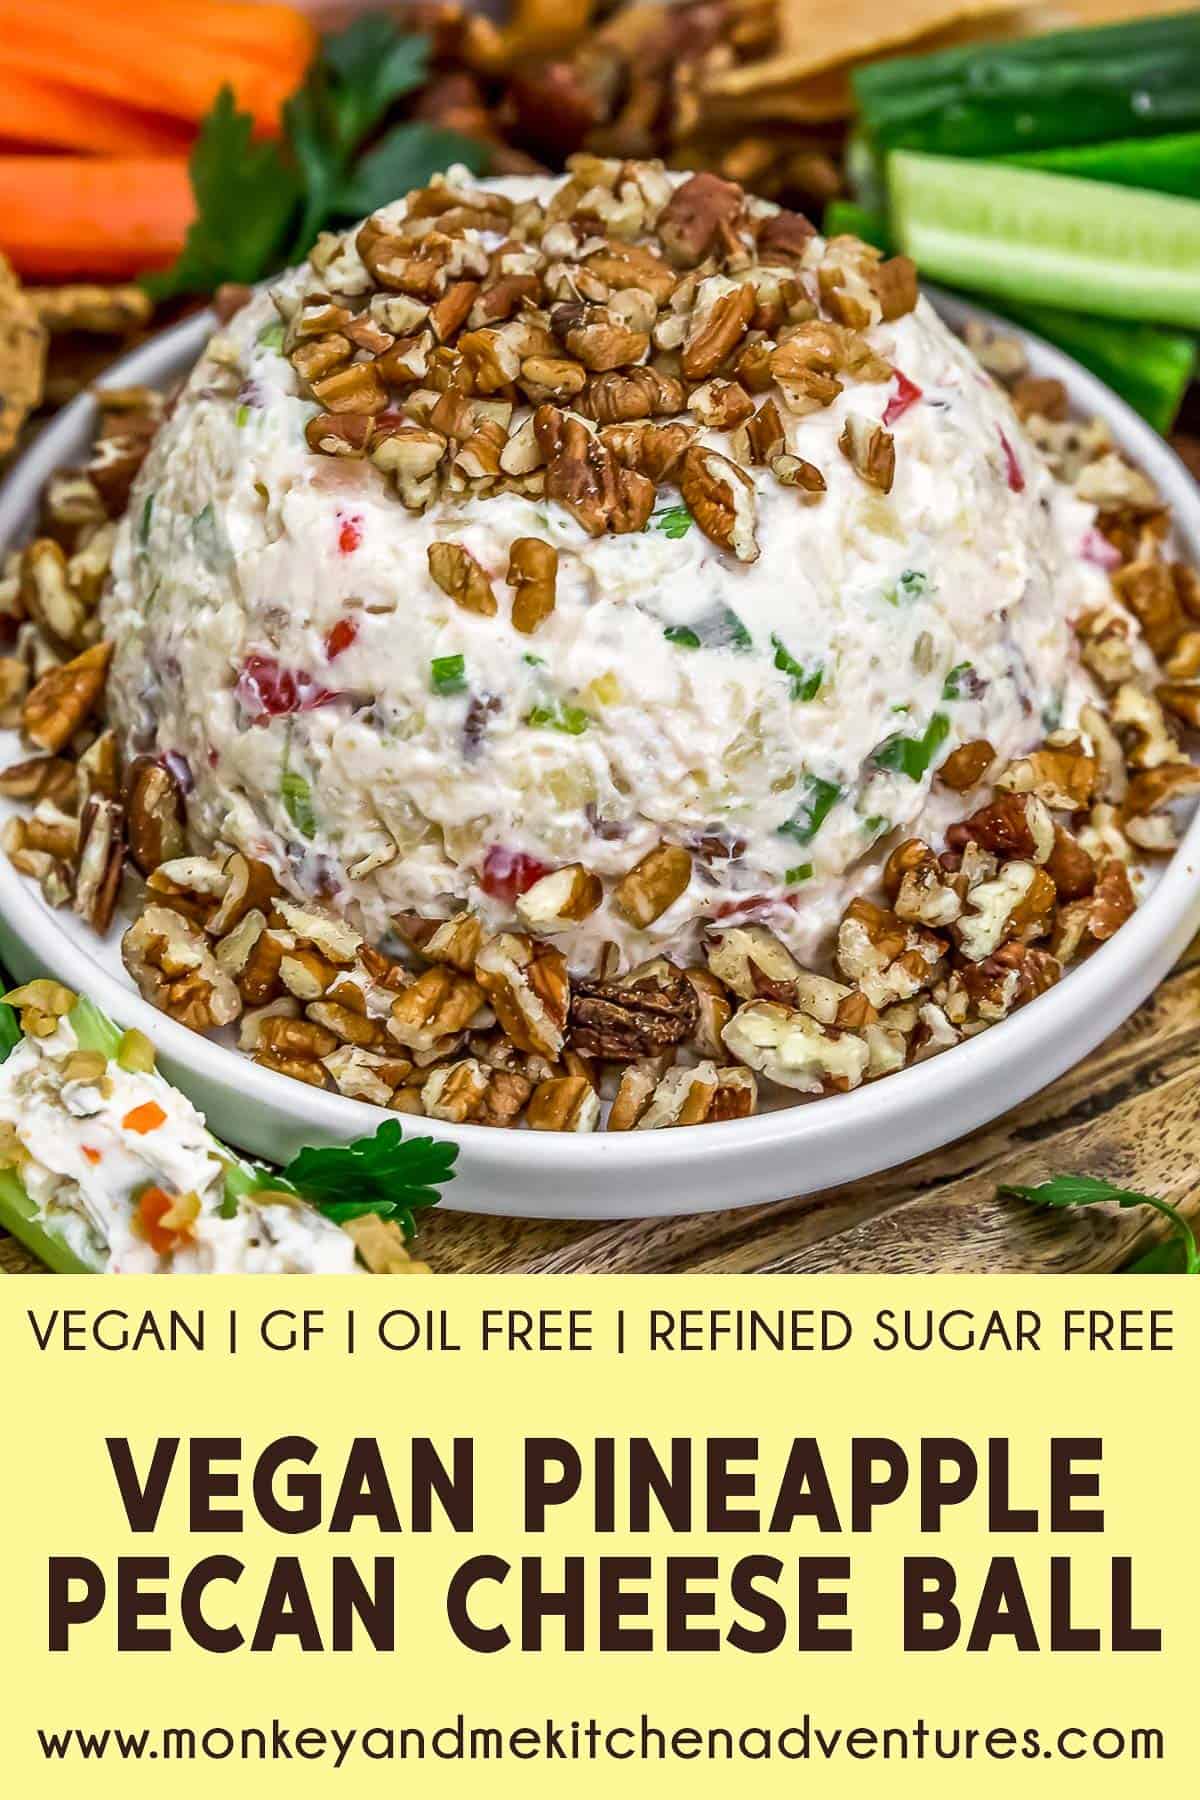 Vegan Pineapple Pecan Cheese Ball with Text Description